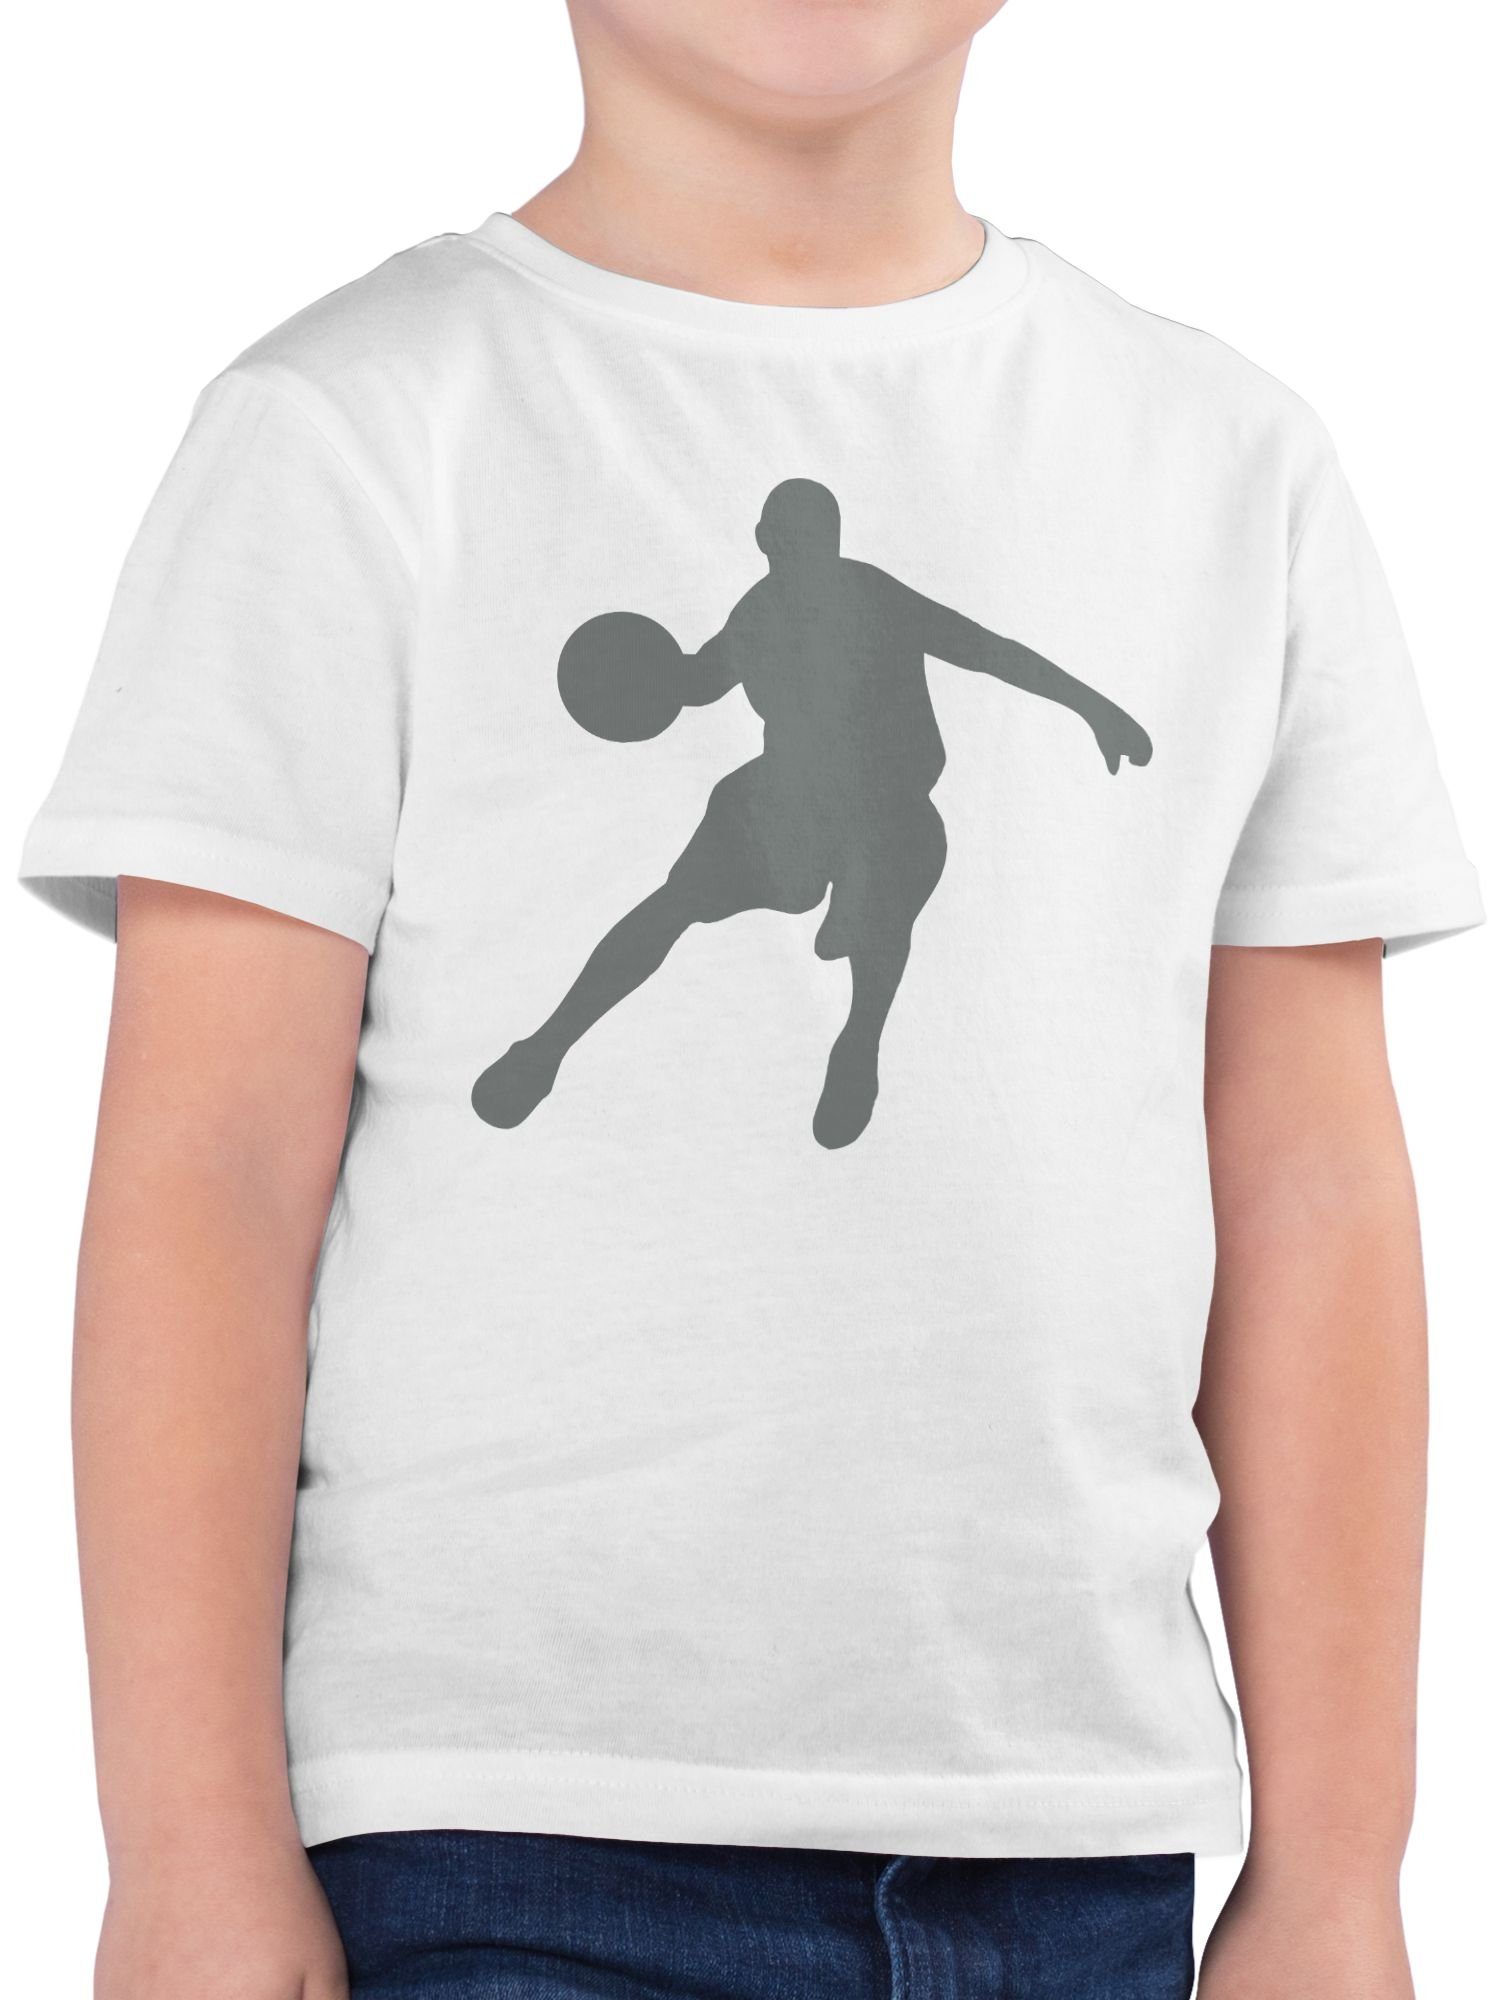 Kinder Kids (Gr. 92 - 146) Shirtracer T-Shirt Basketballspieler - Kinder Sport Kleidung - Jungen Kinder T-Shirt Sportkleidung Zu